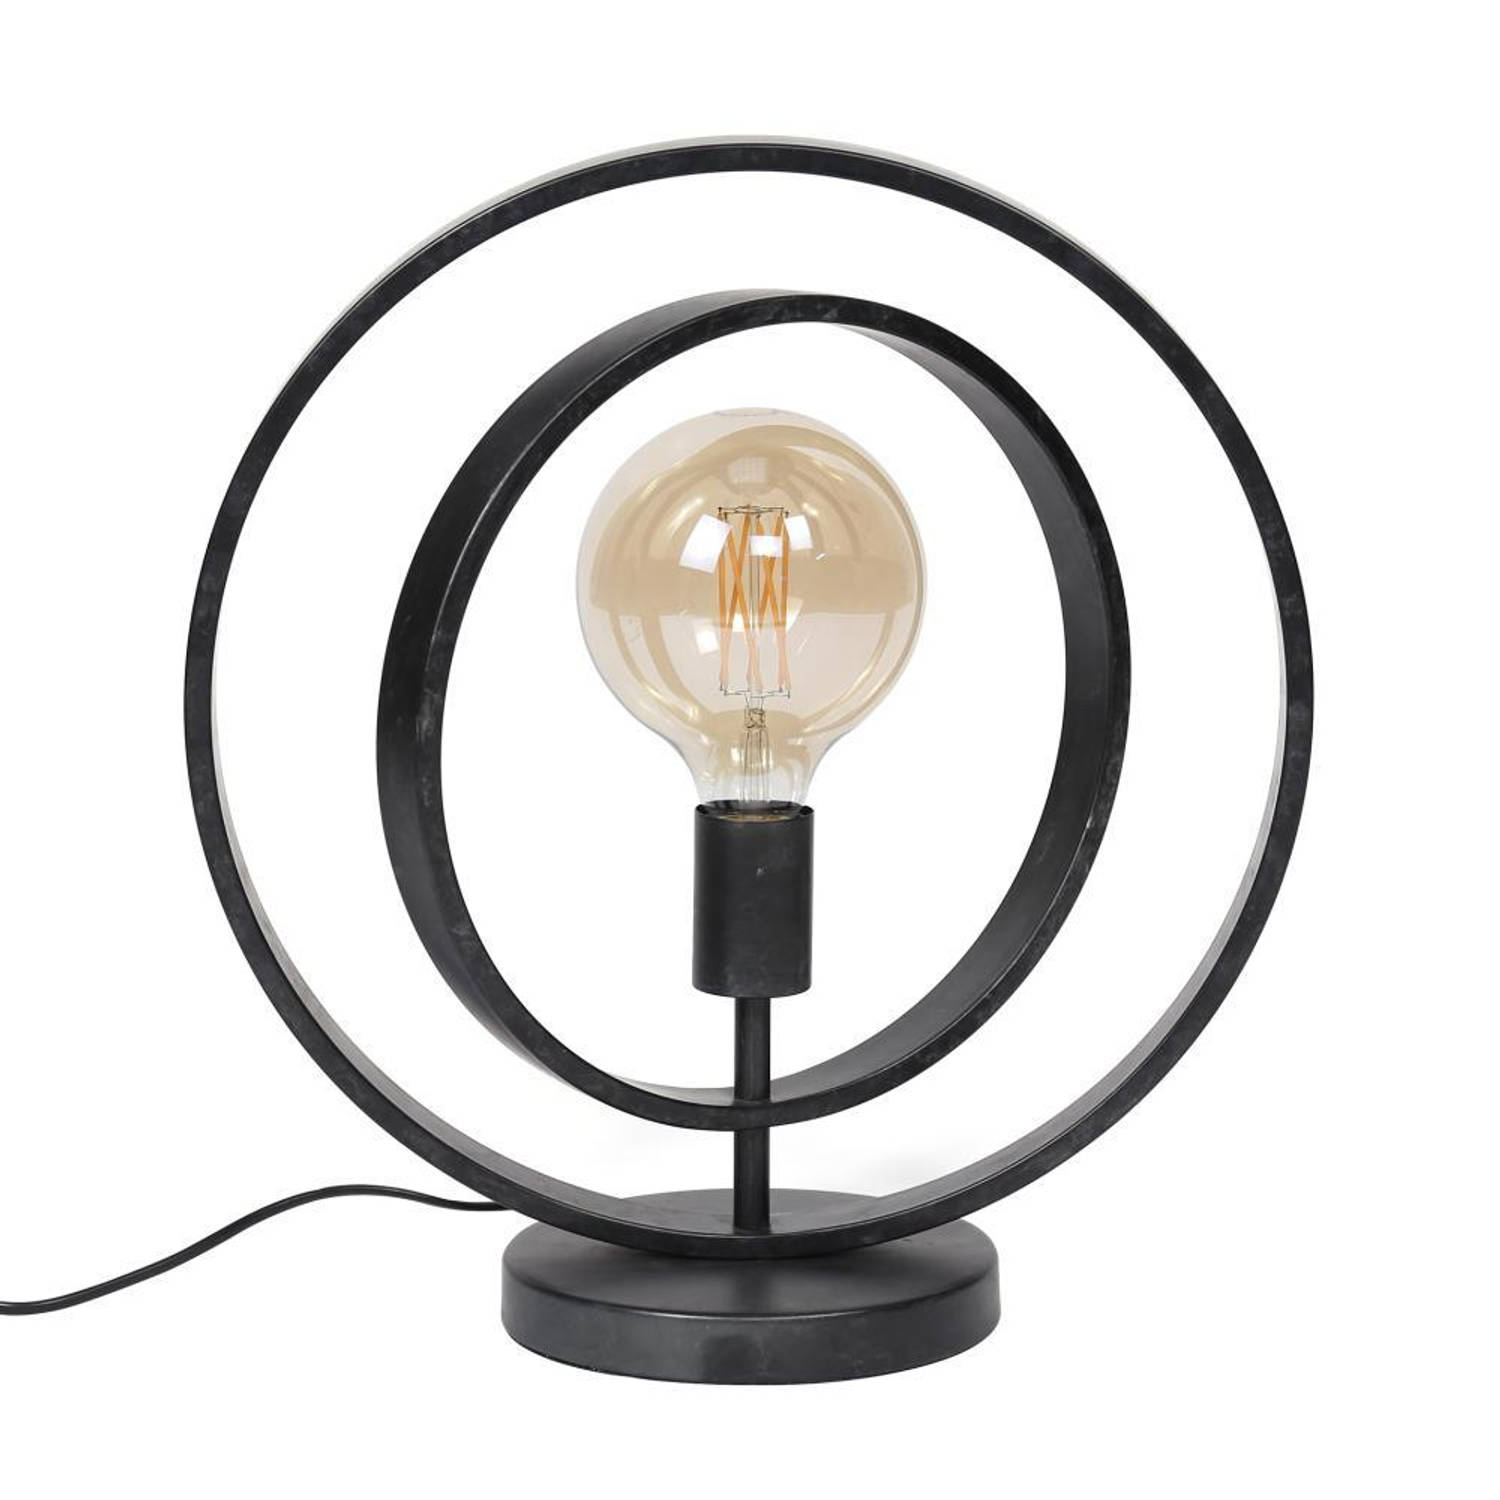 Giga Meubel Gm Tafellamp 1-lichts - Metaal - Rond - Lamp Turn Around